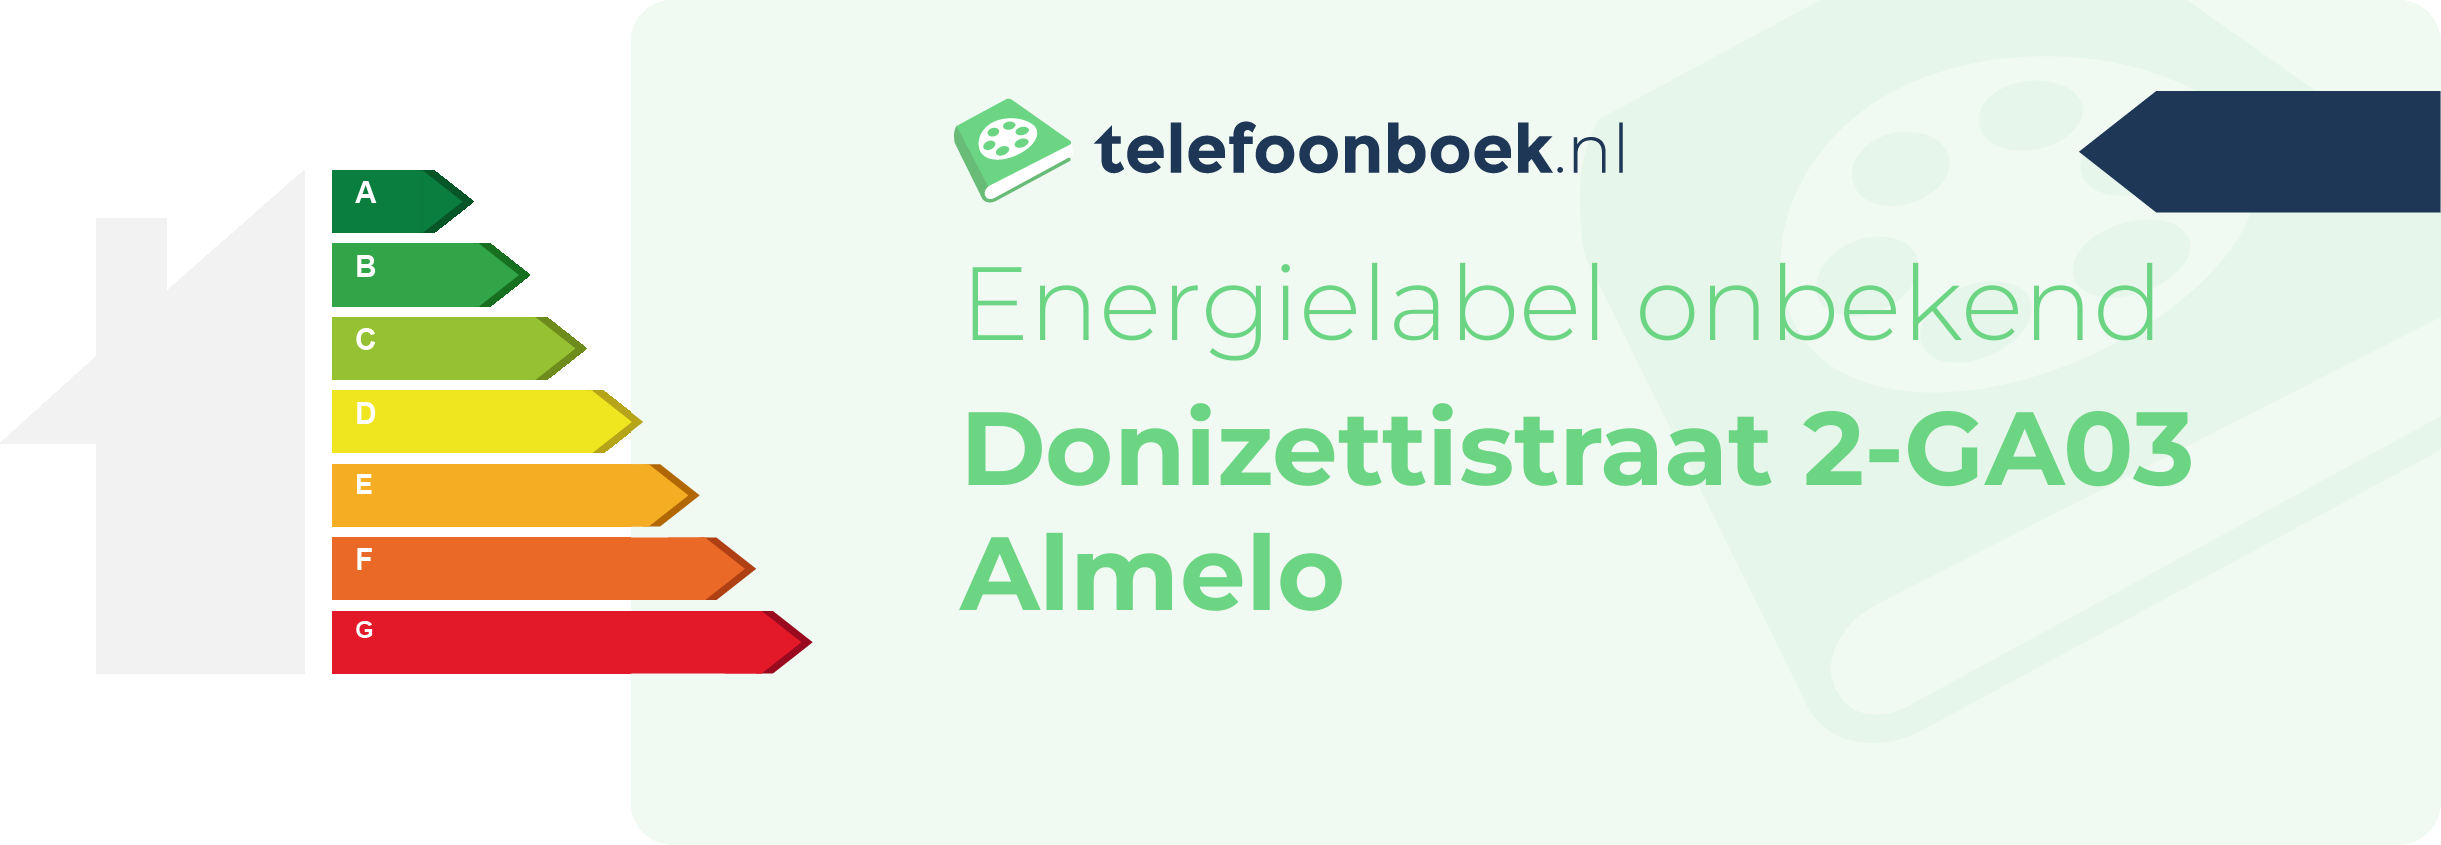 Energielabel Donizettistraat 2-GA03 Almelo